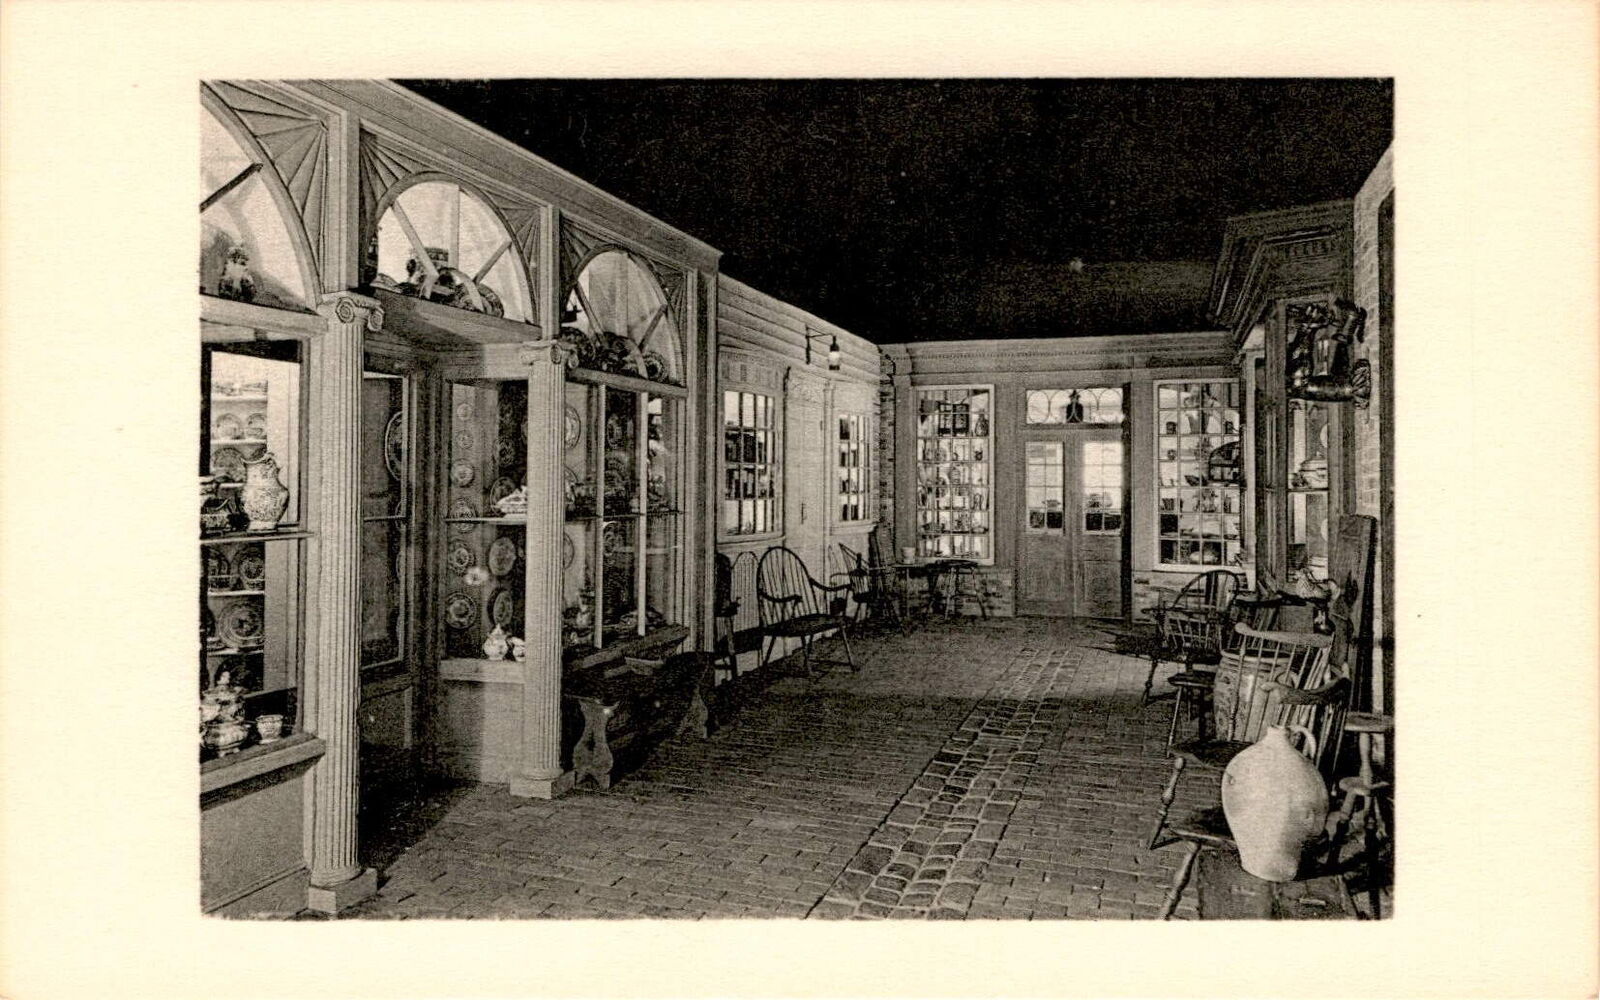 Gilbert Ask, American shop fronts, The Shop Lane, Henry Francis du Postcard